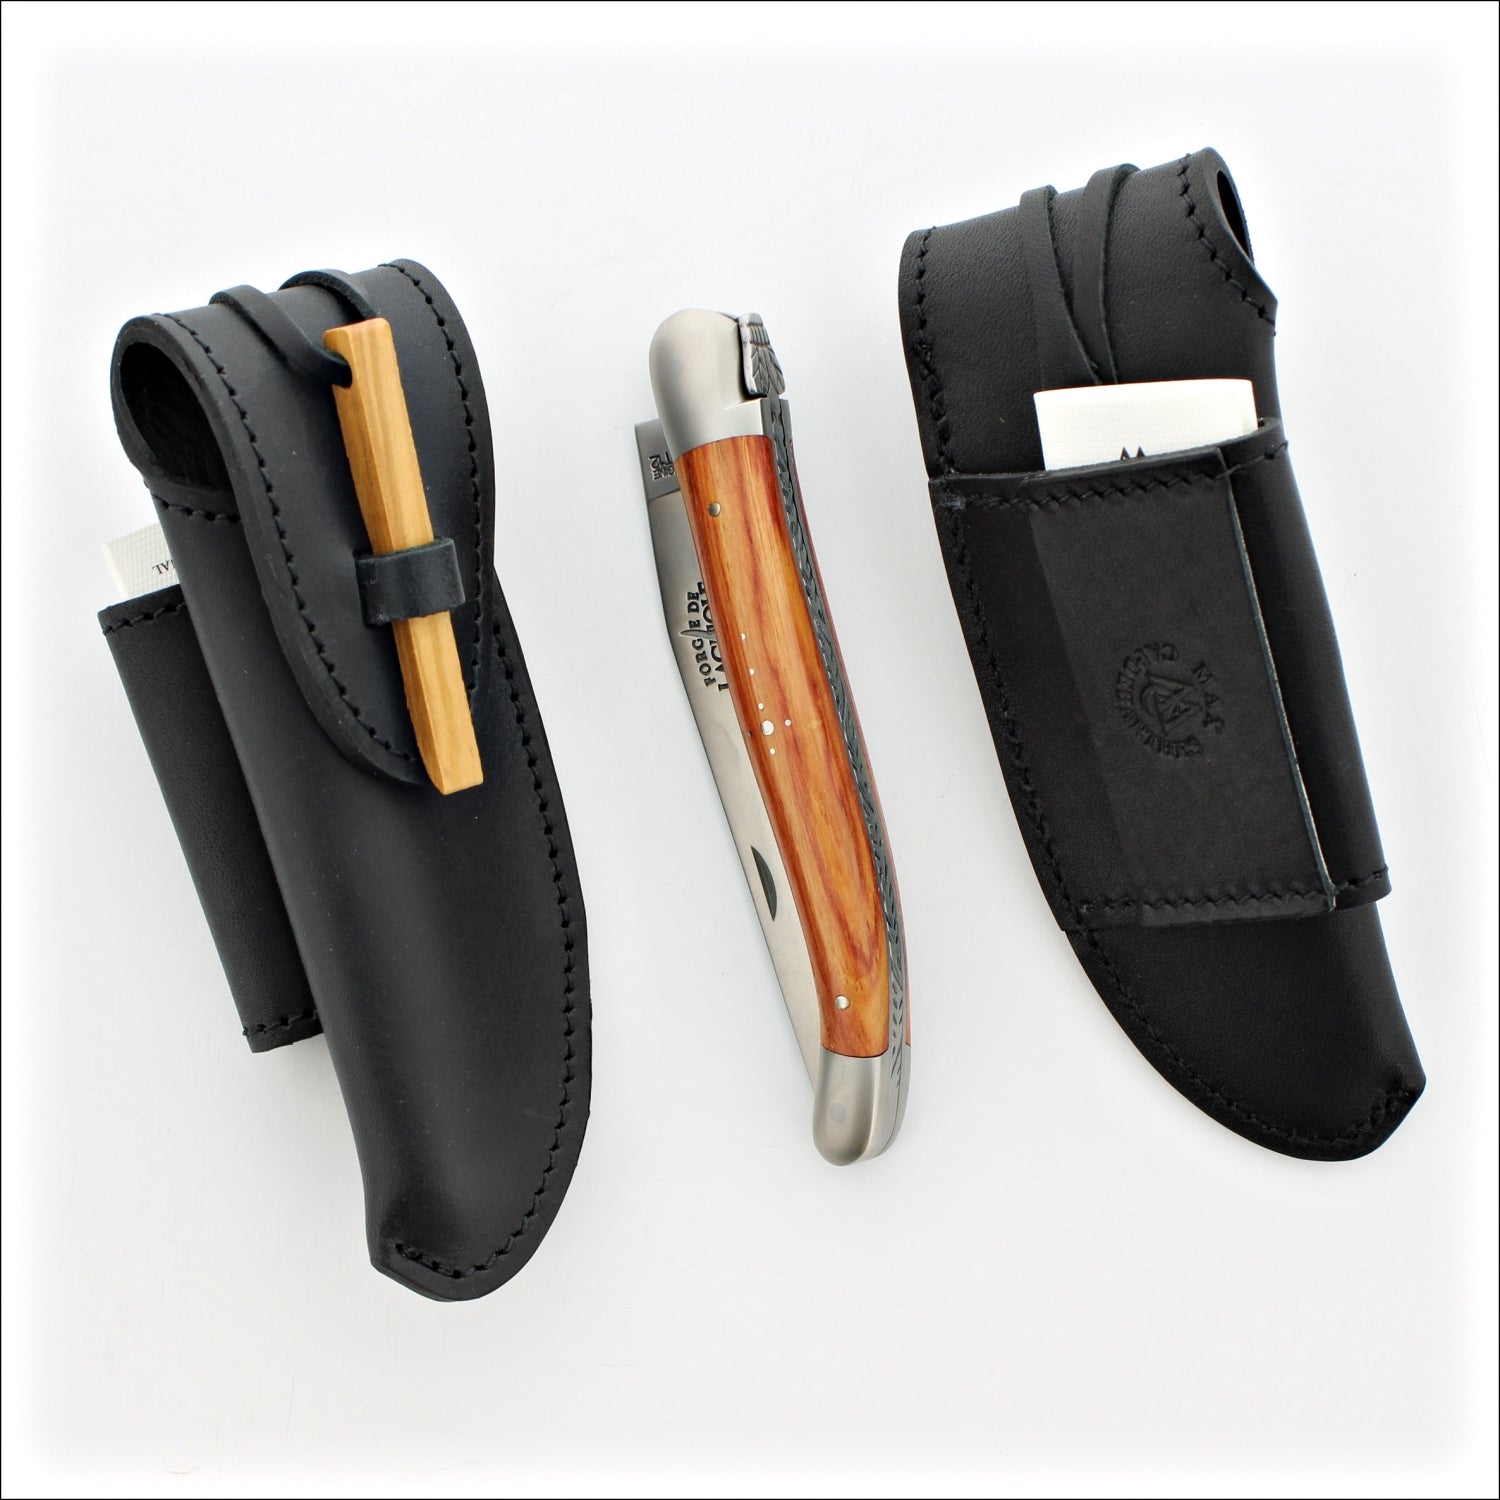 Trappeur Leather Sheath for 12cm Laguiole Pocket Knives